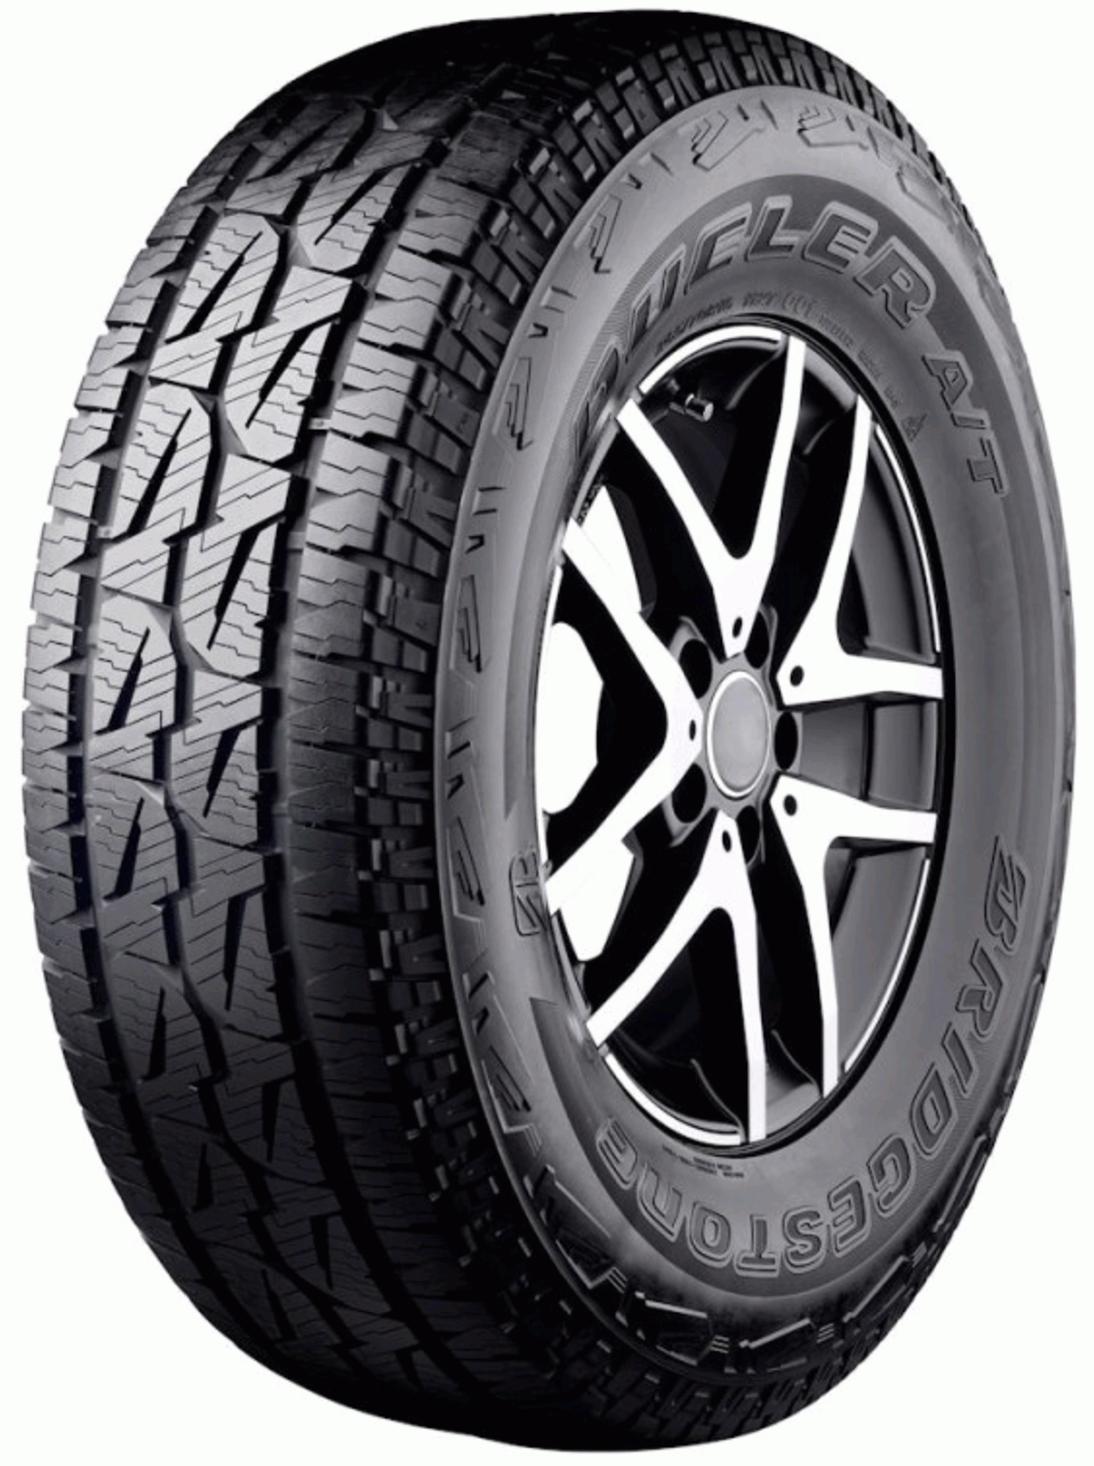 Bridgestone Dueler Reviews Tests Tire - AT 001 and